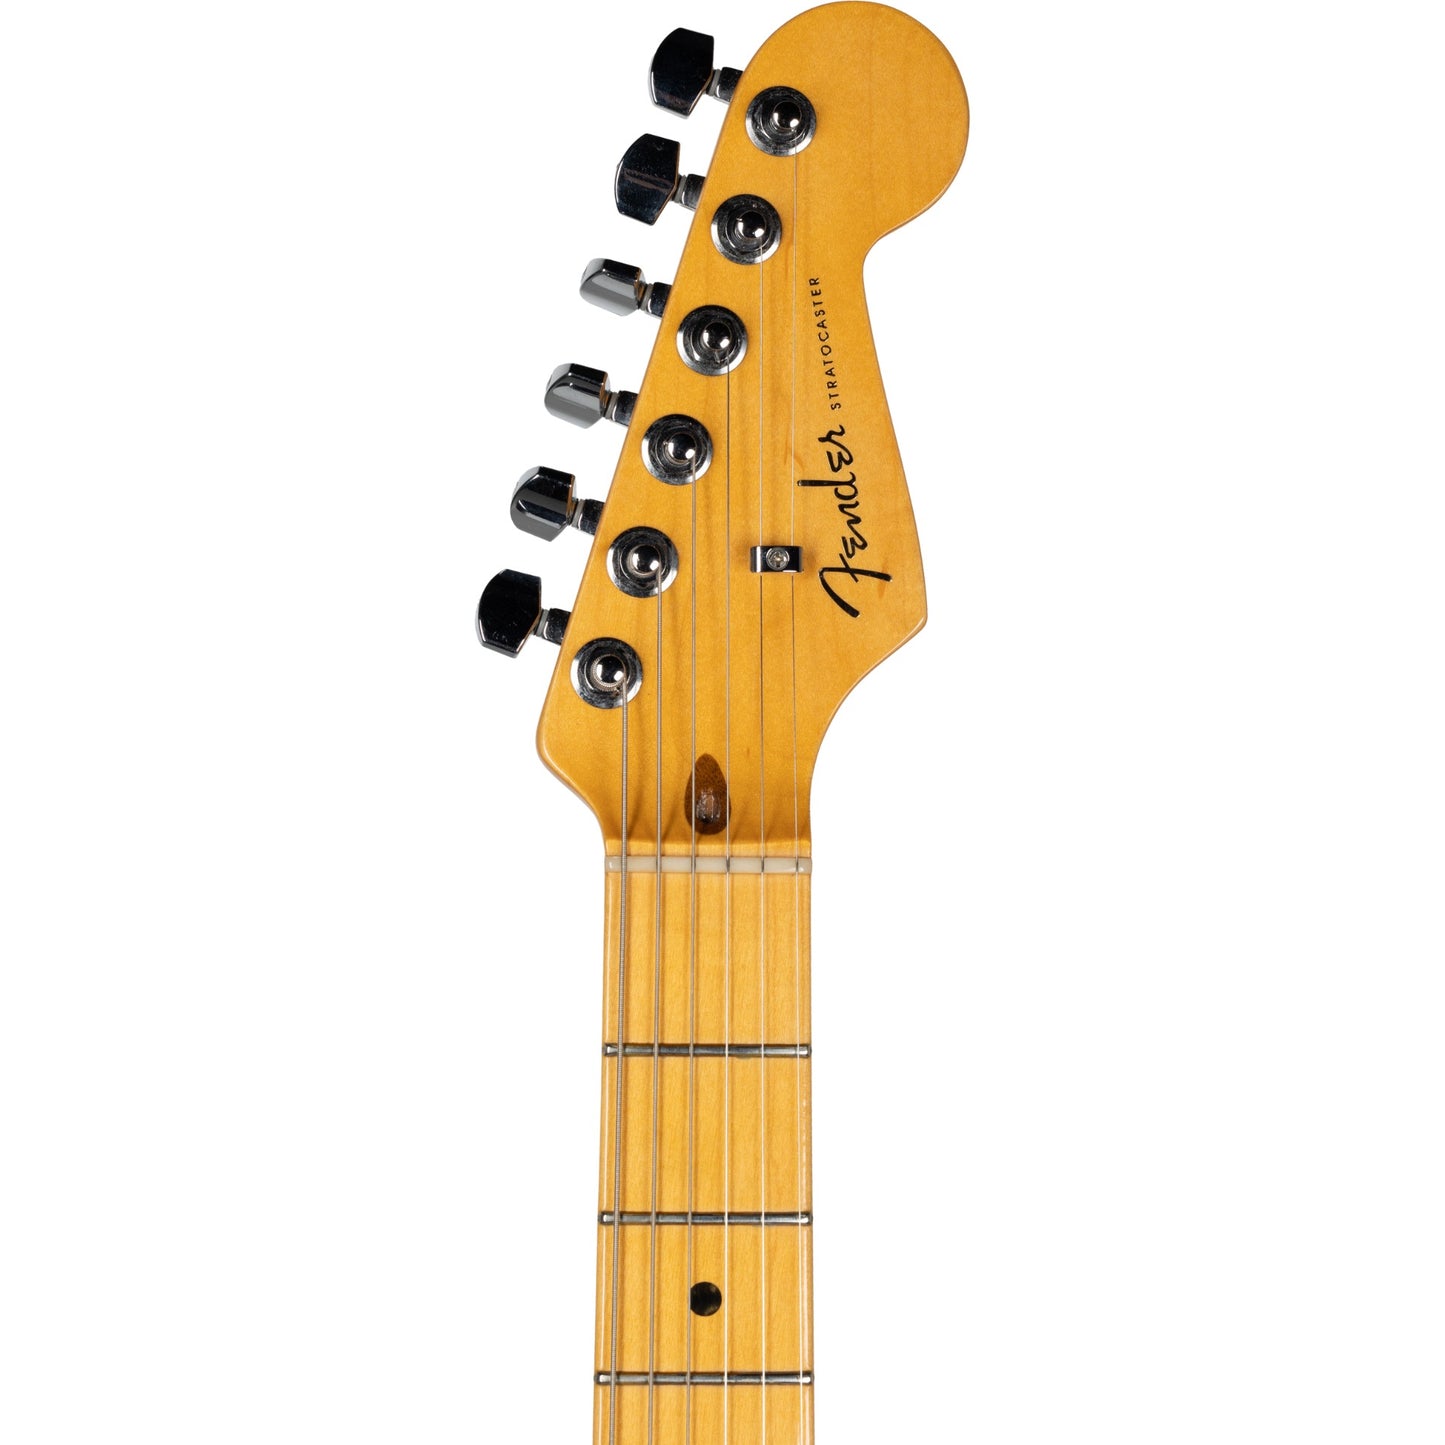 Fender American Ultra Stratocaster Electric Guitar in Cobra Blue